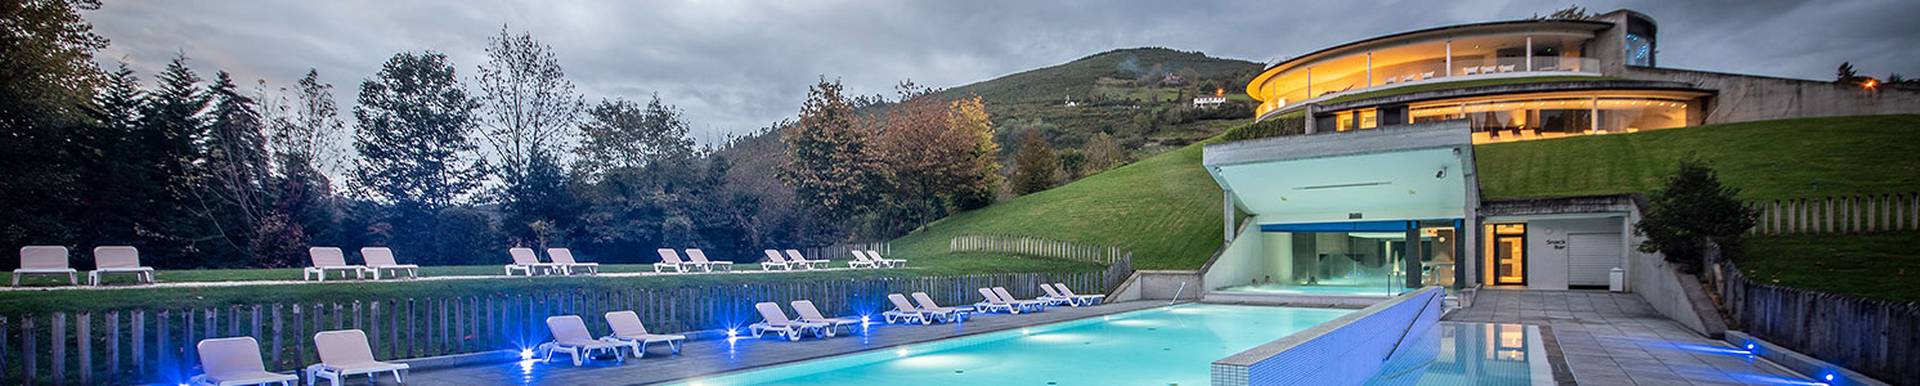 Blau hotels - Asturien - 